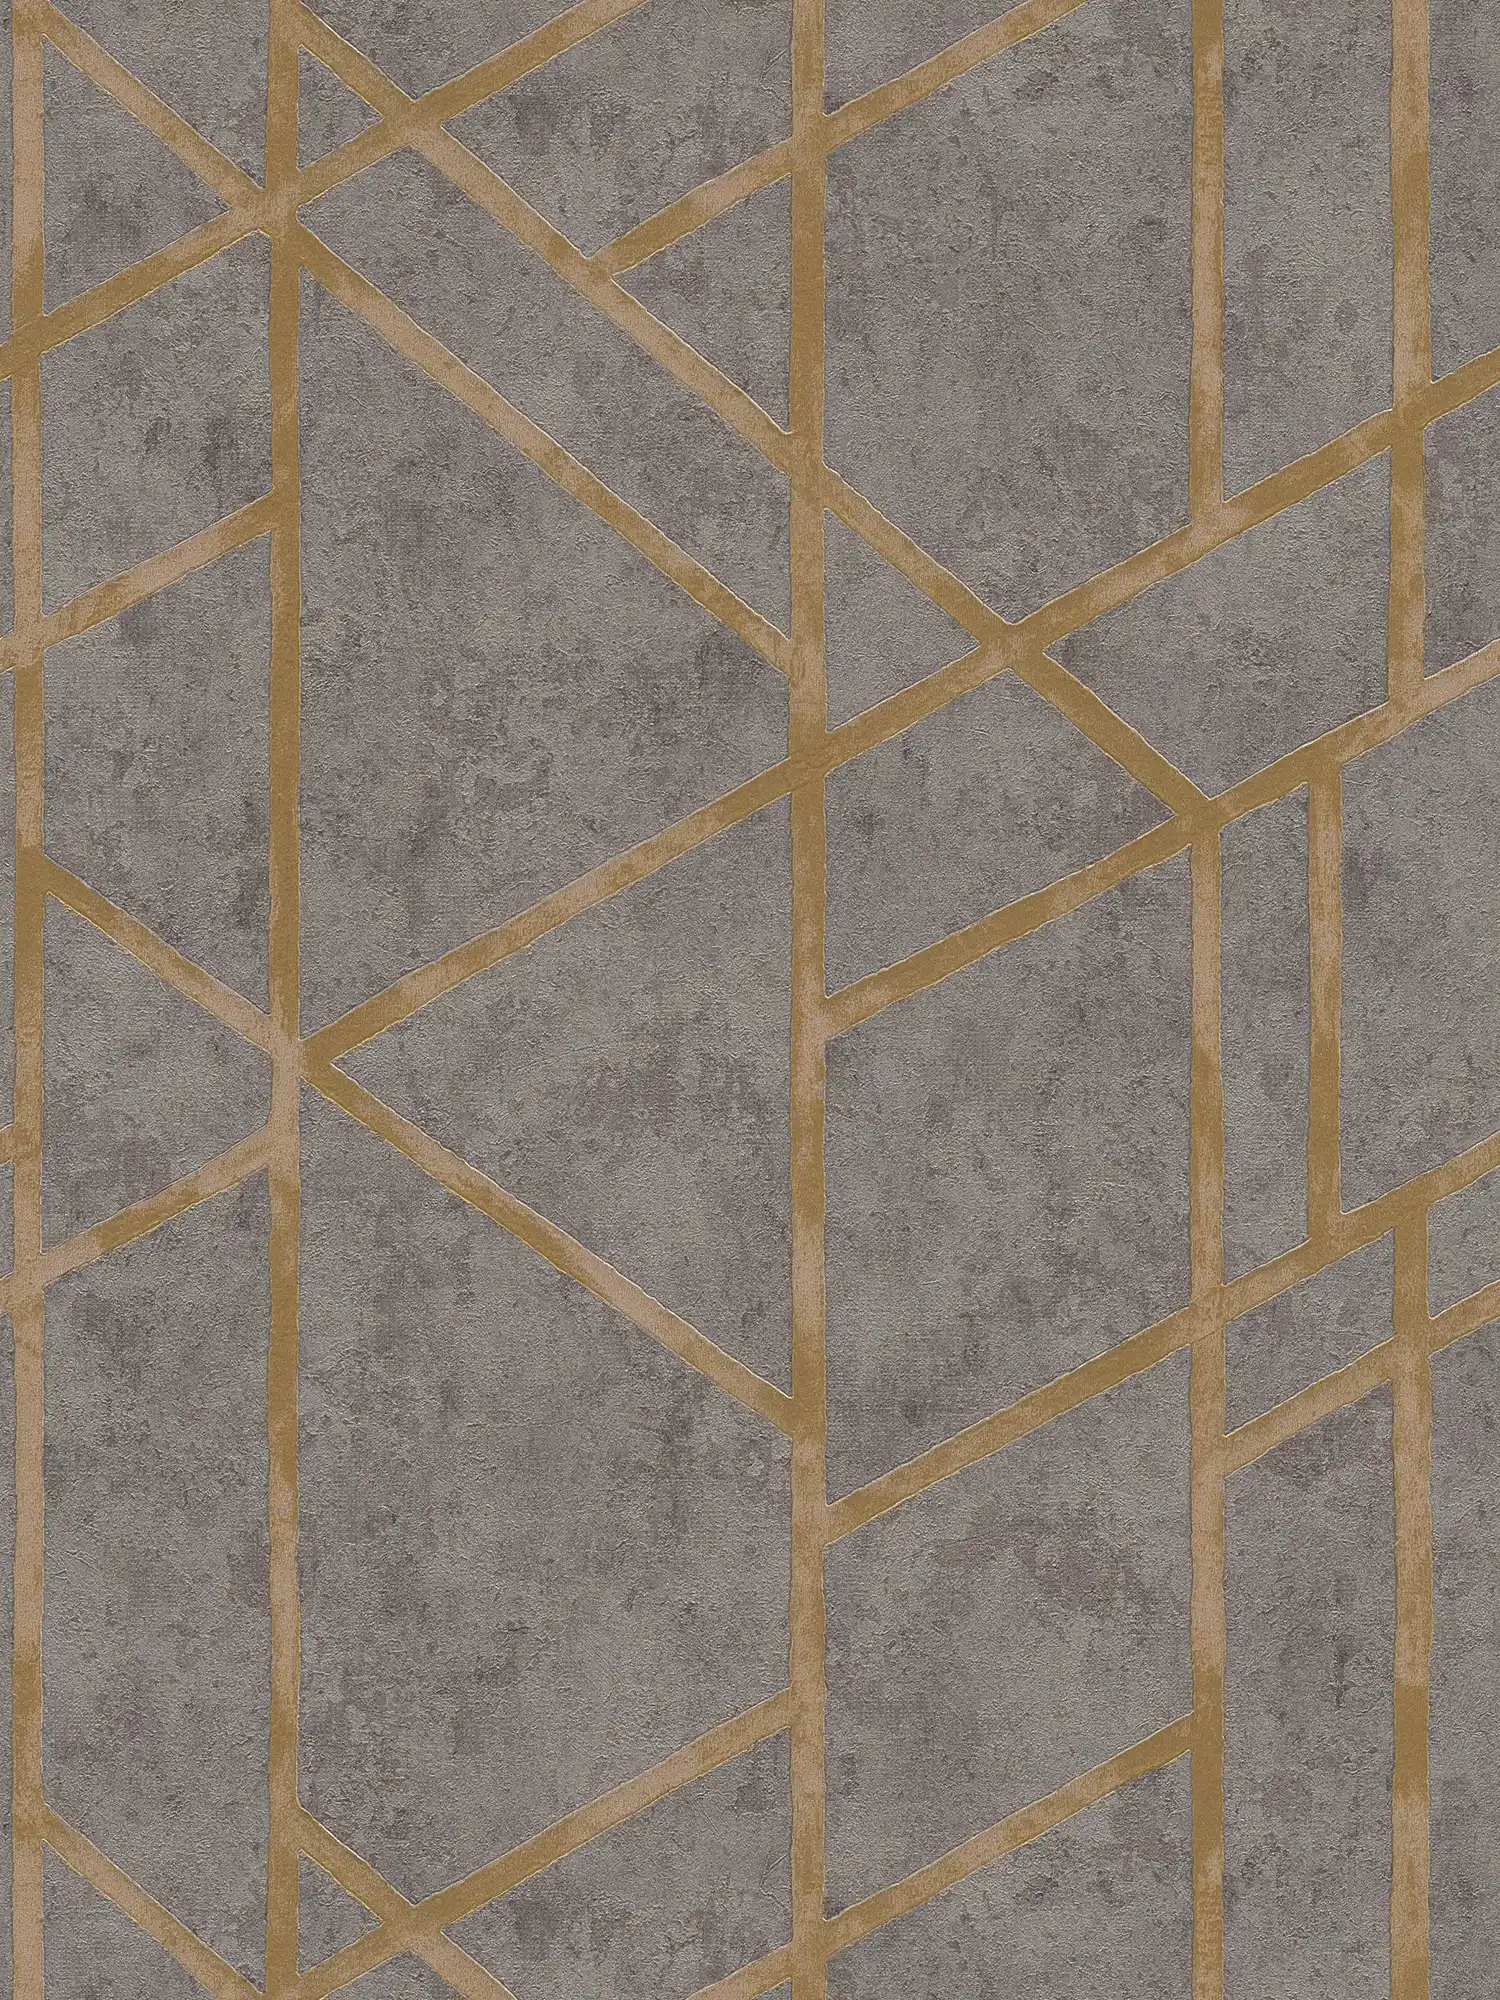 Betontapete mit goldenem Linien-Muster – Grau, Gold
